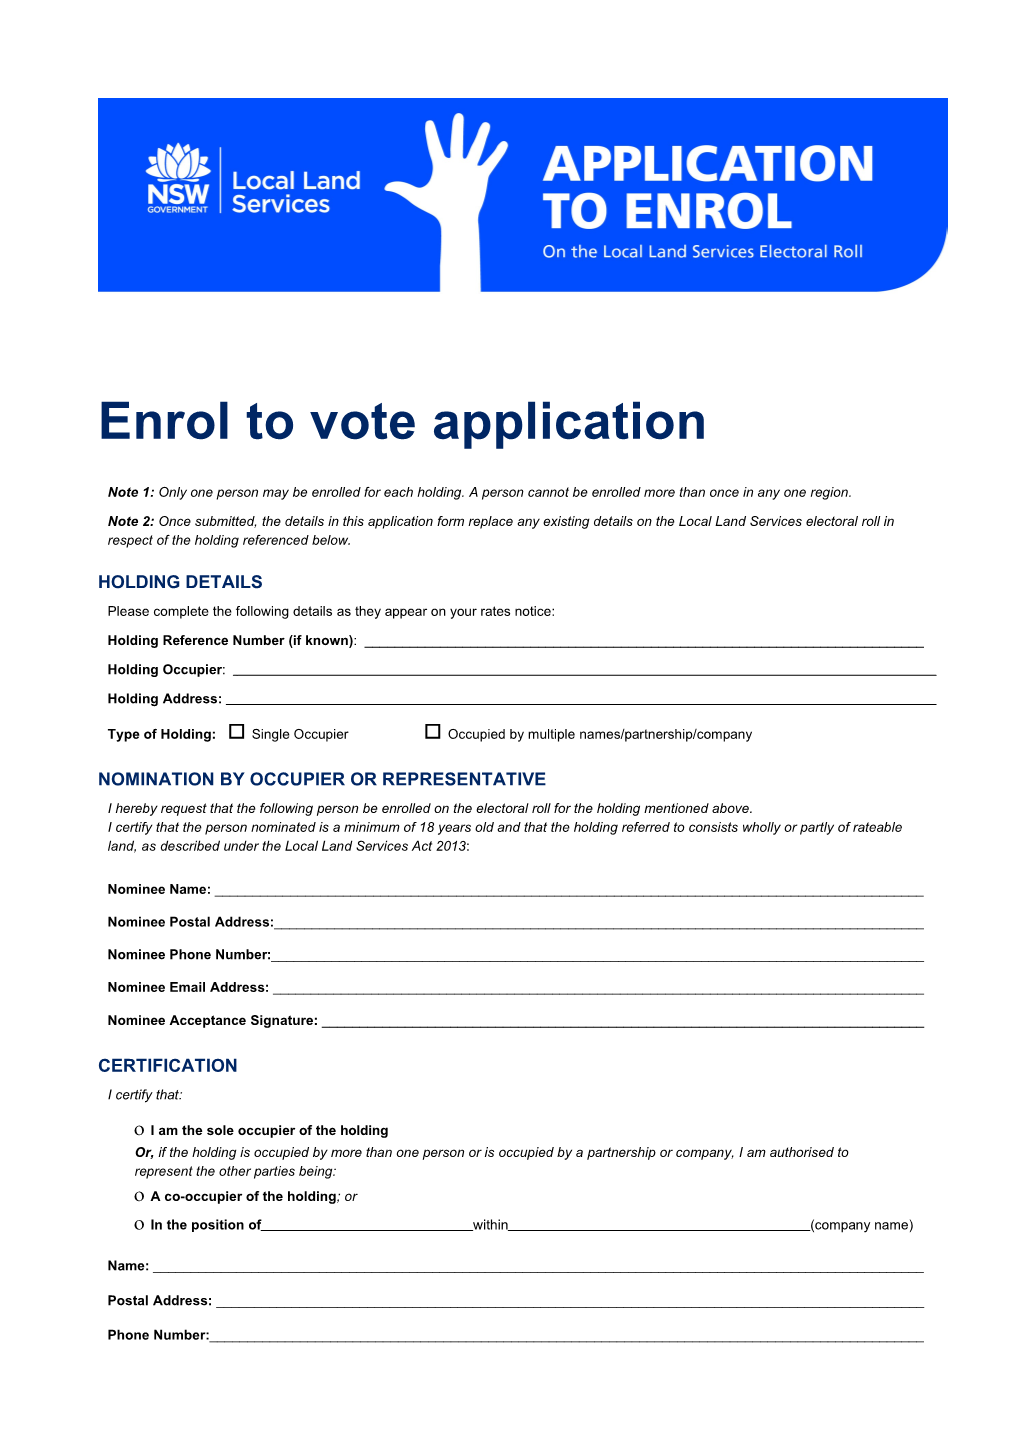 Enrol to Vote Application